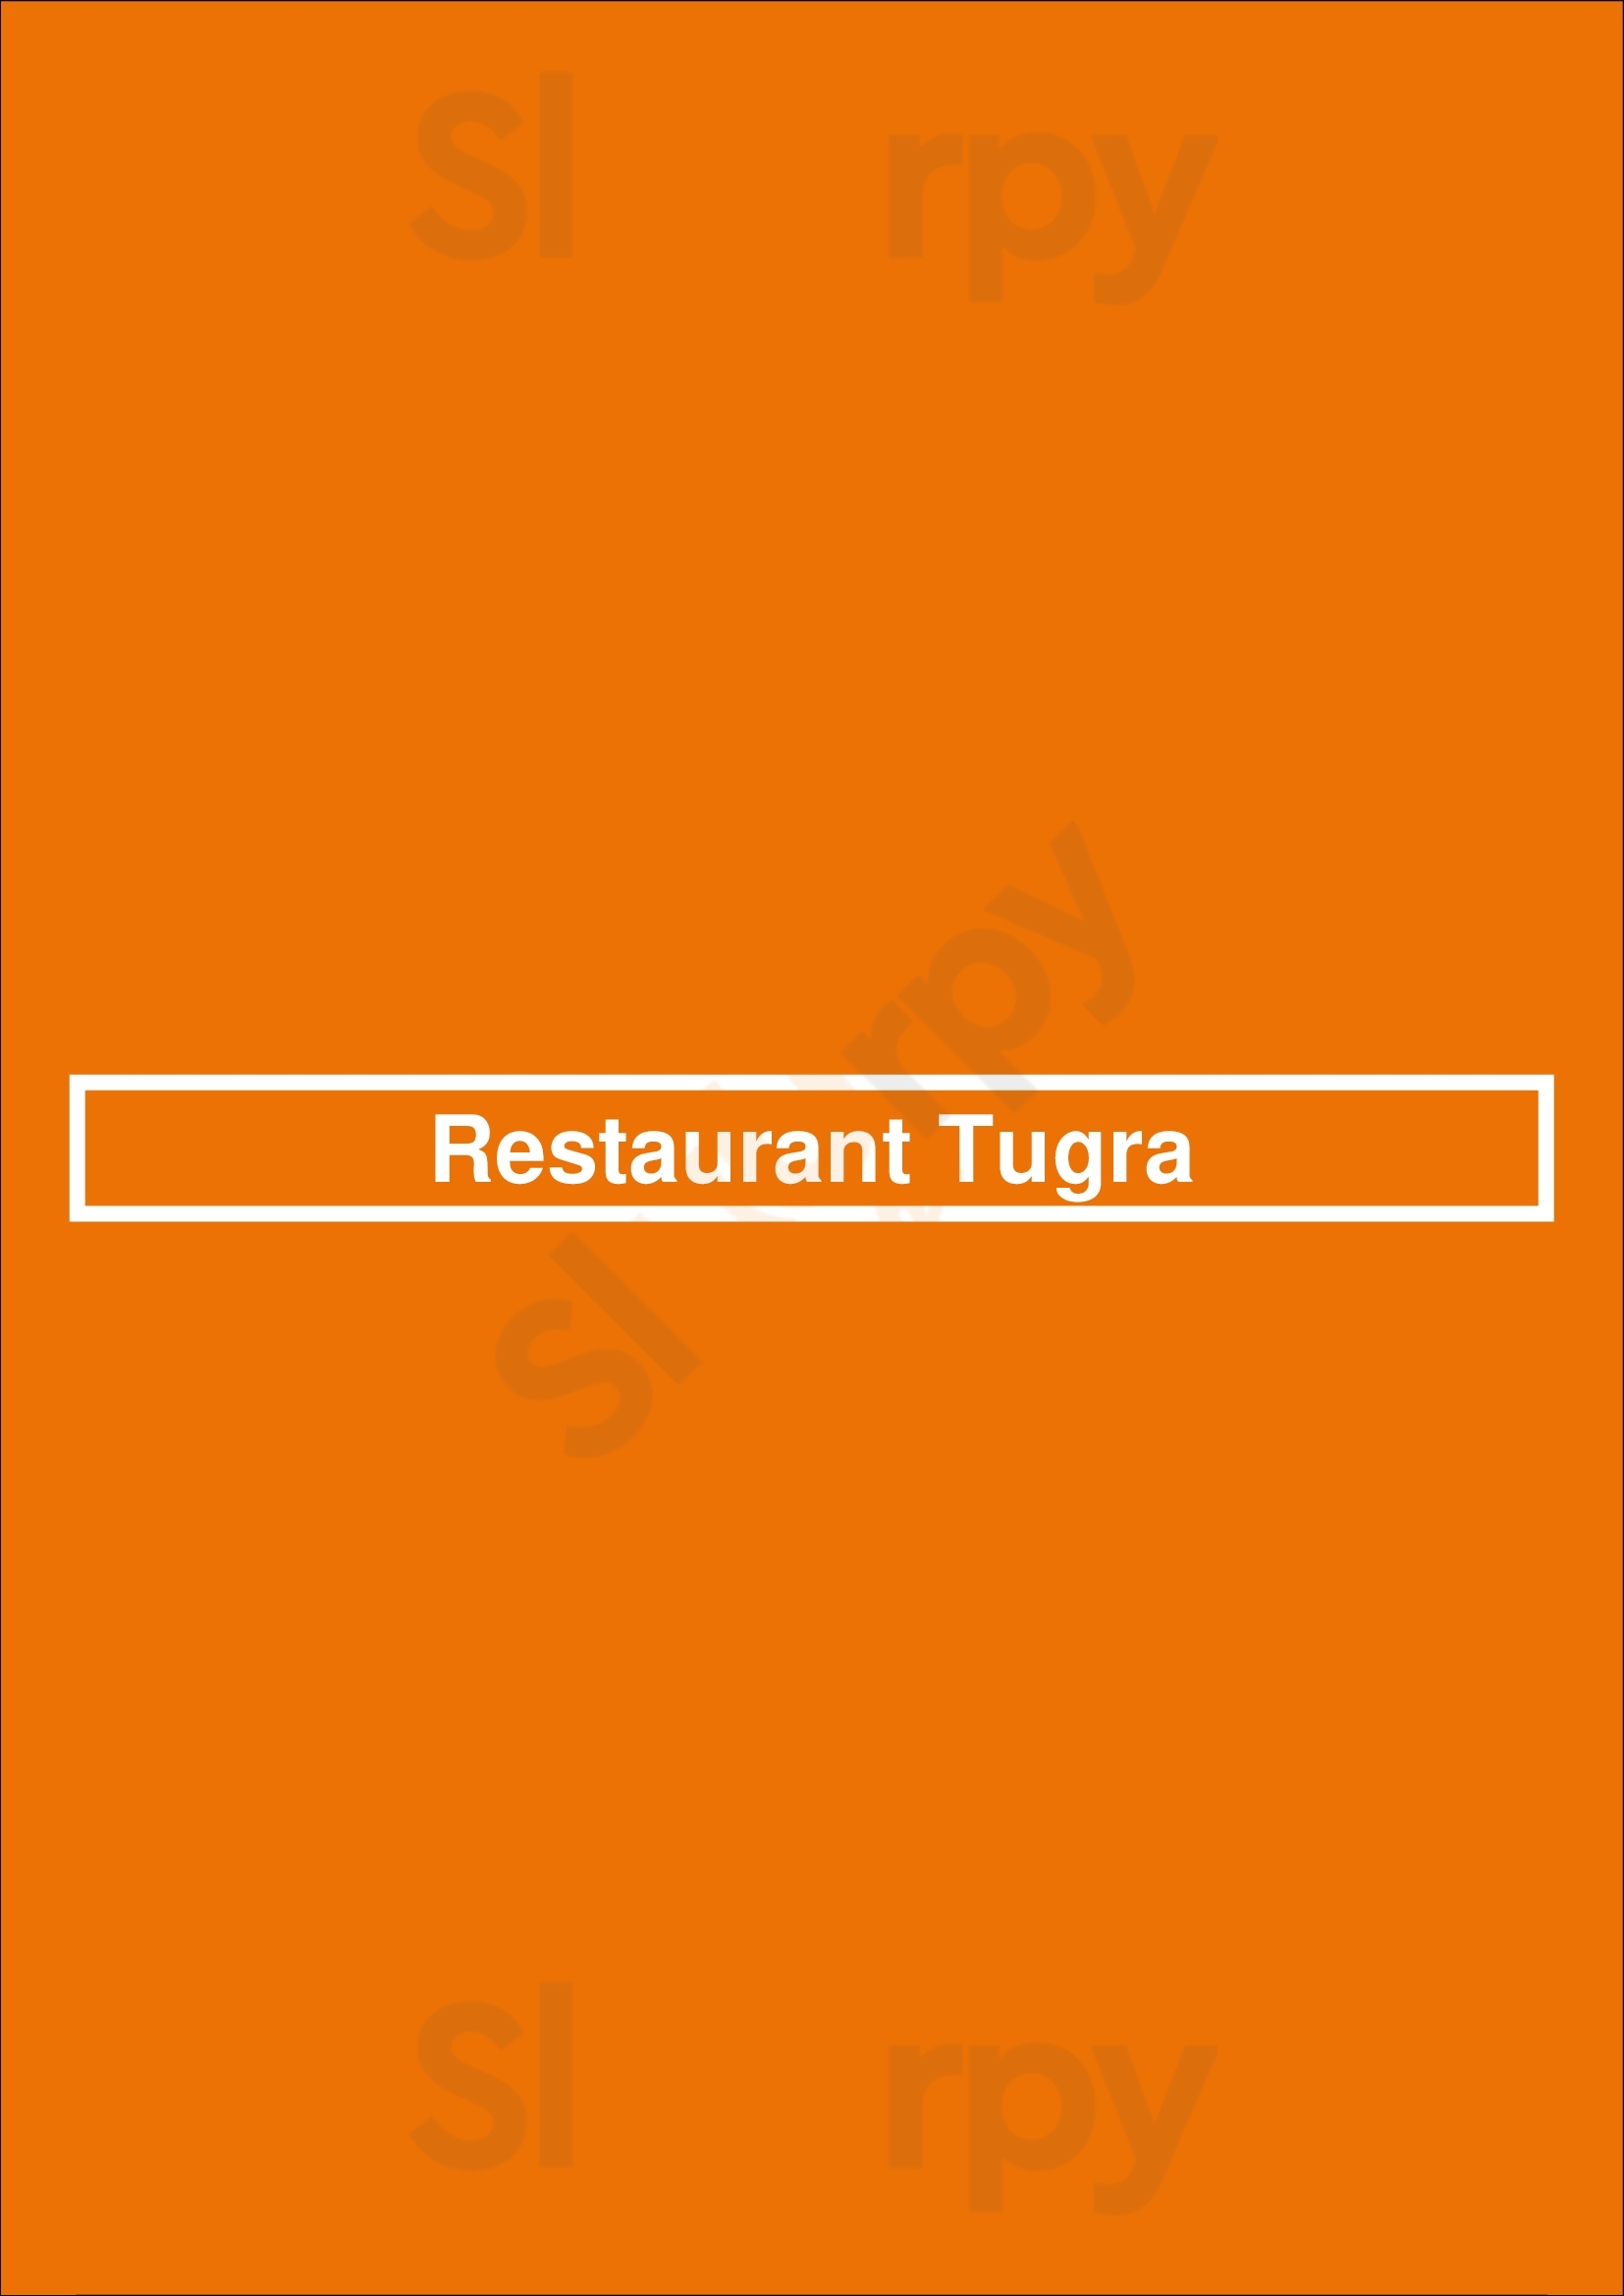 Restaurant Tugra Berlin Menu - 1